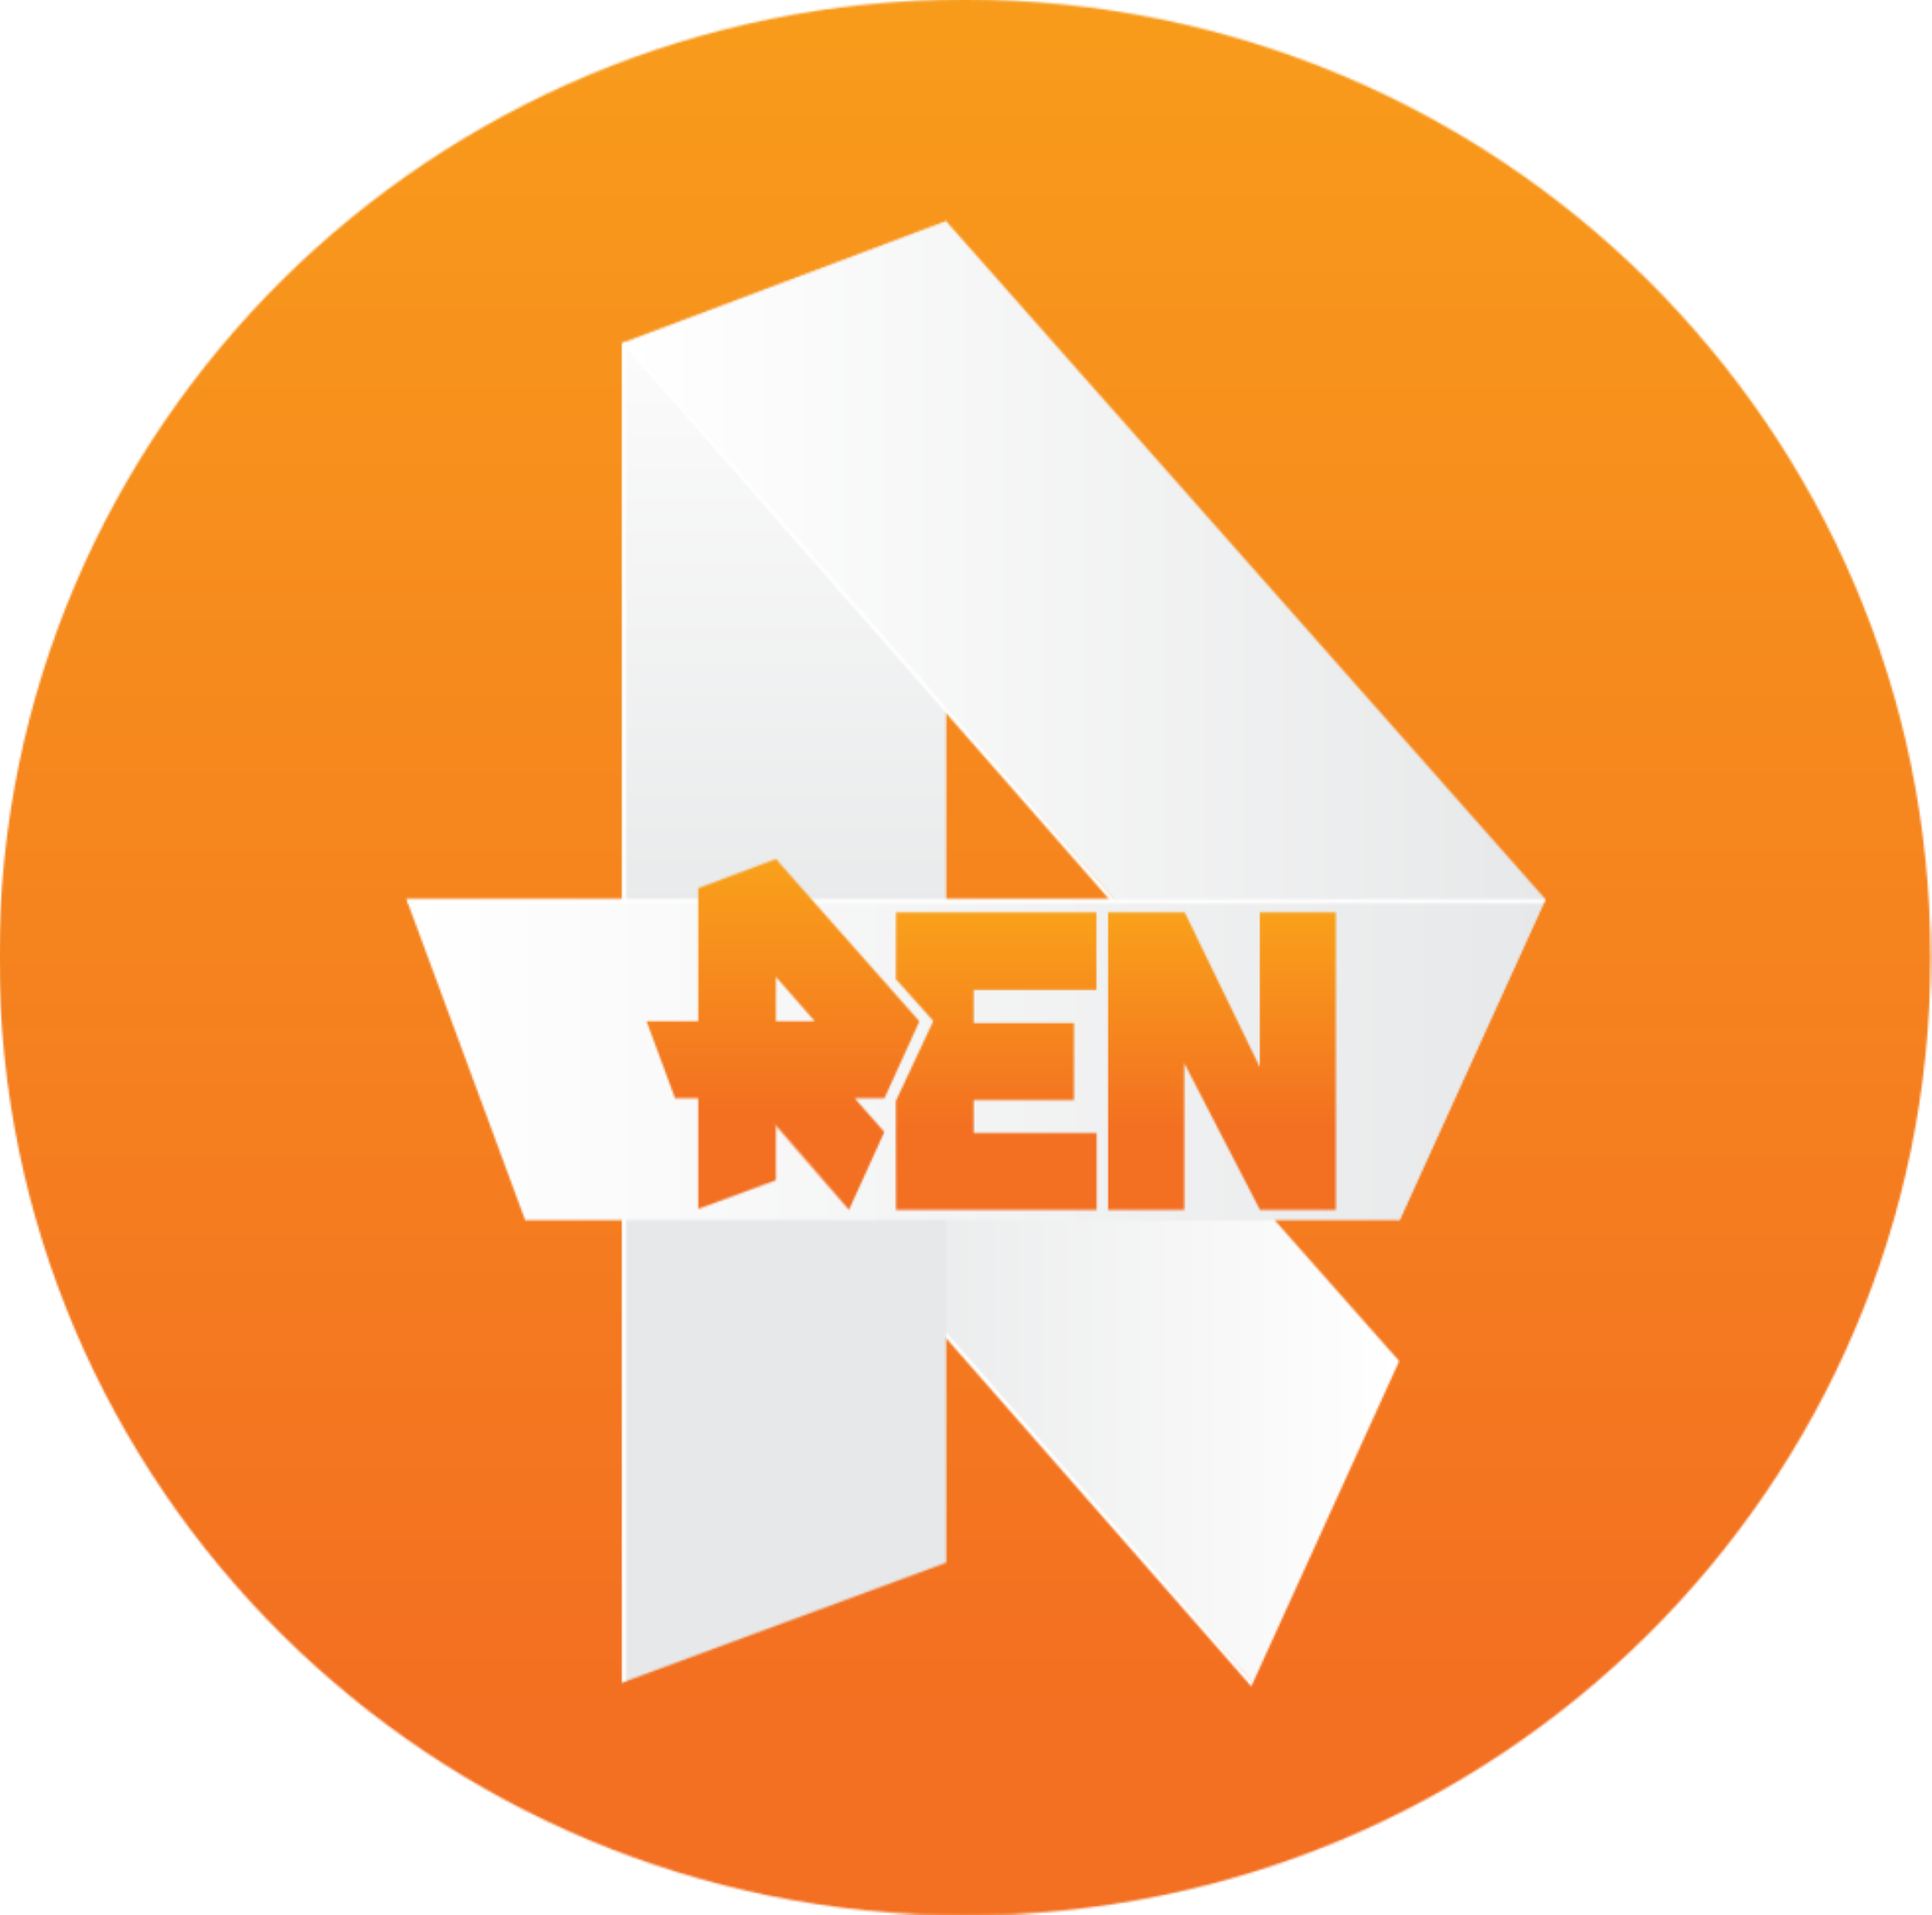 Ren tv live. Логотип телеканала РЕН ТВ International. Ренств. РЕН логотип. РЕН ТВ новый логотип.